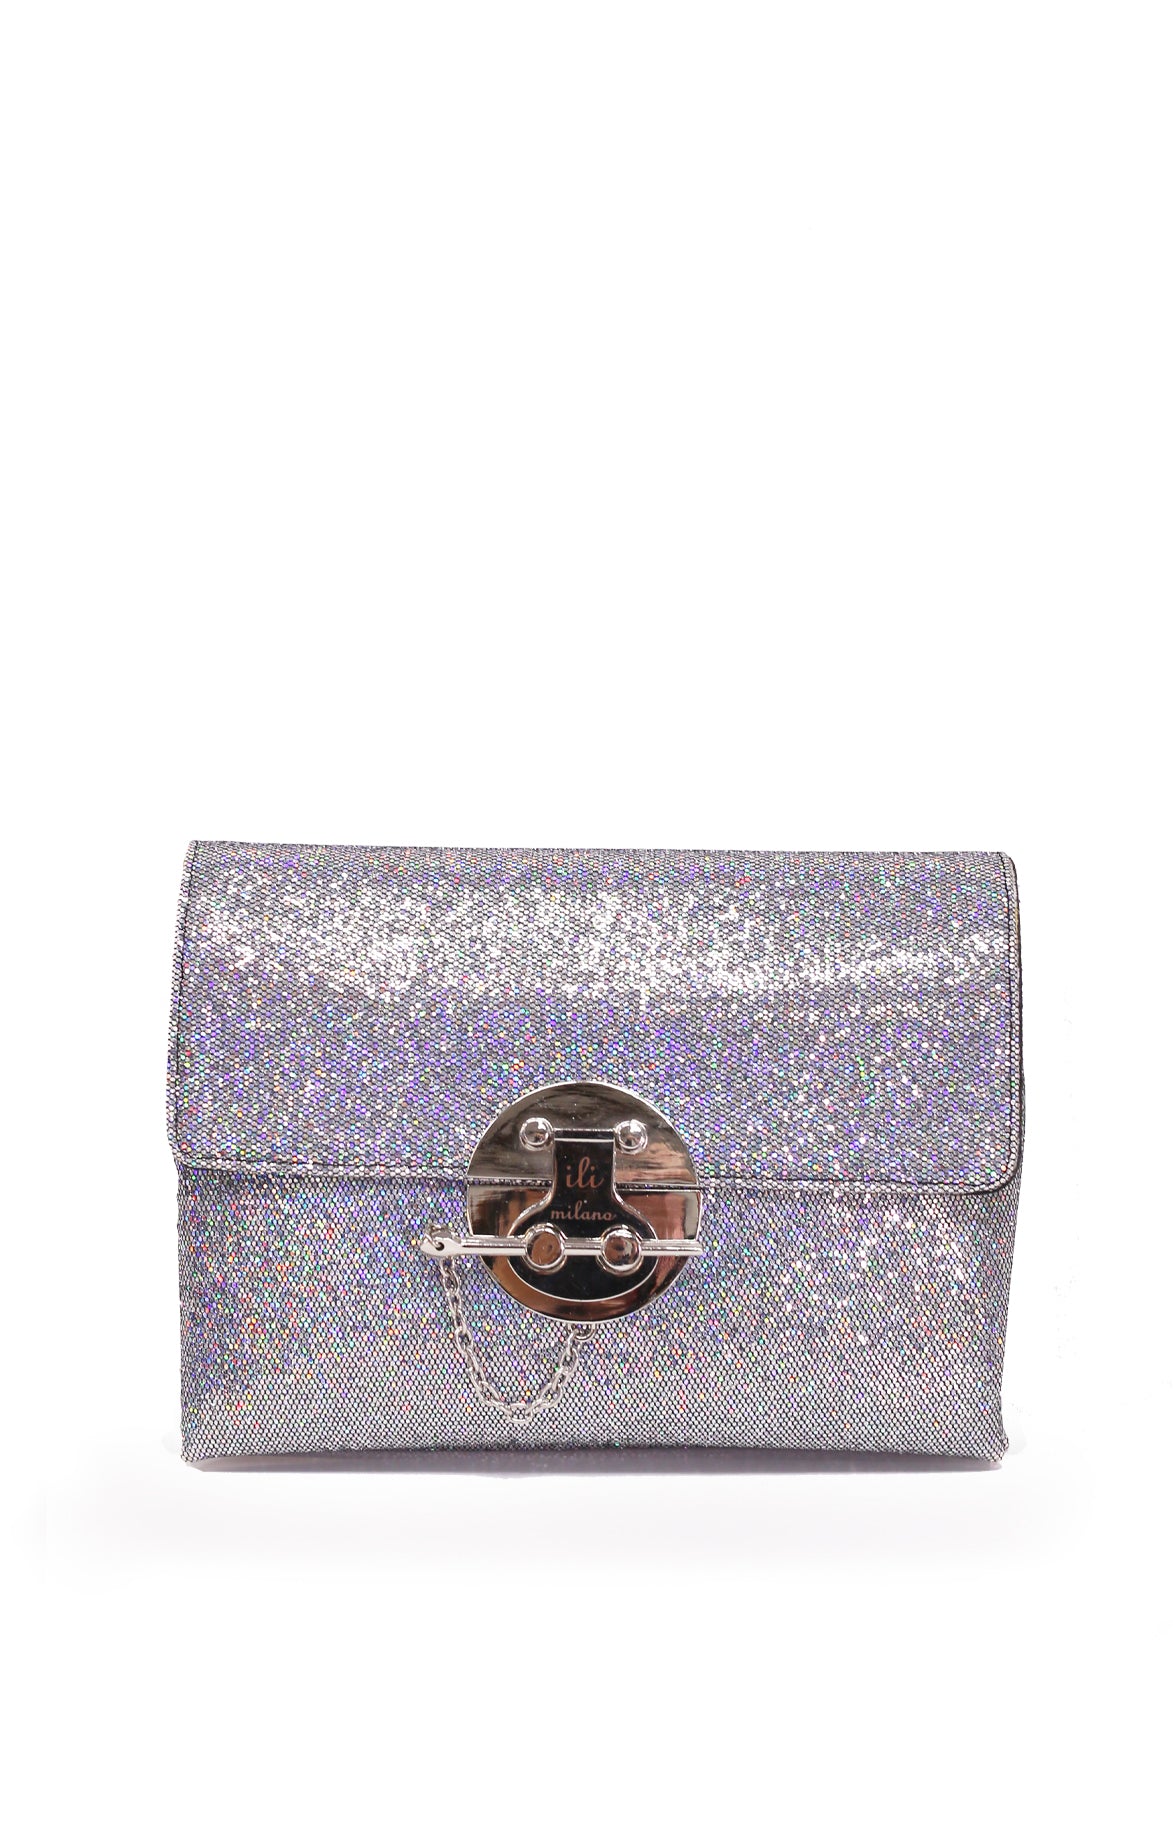 Metallic Lilac Clutch Bag